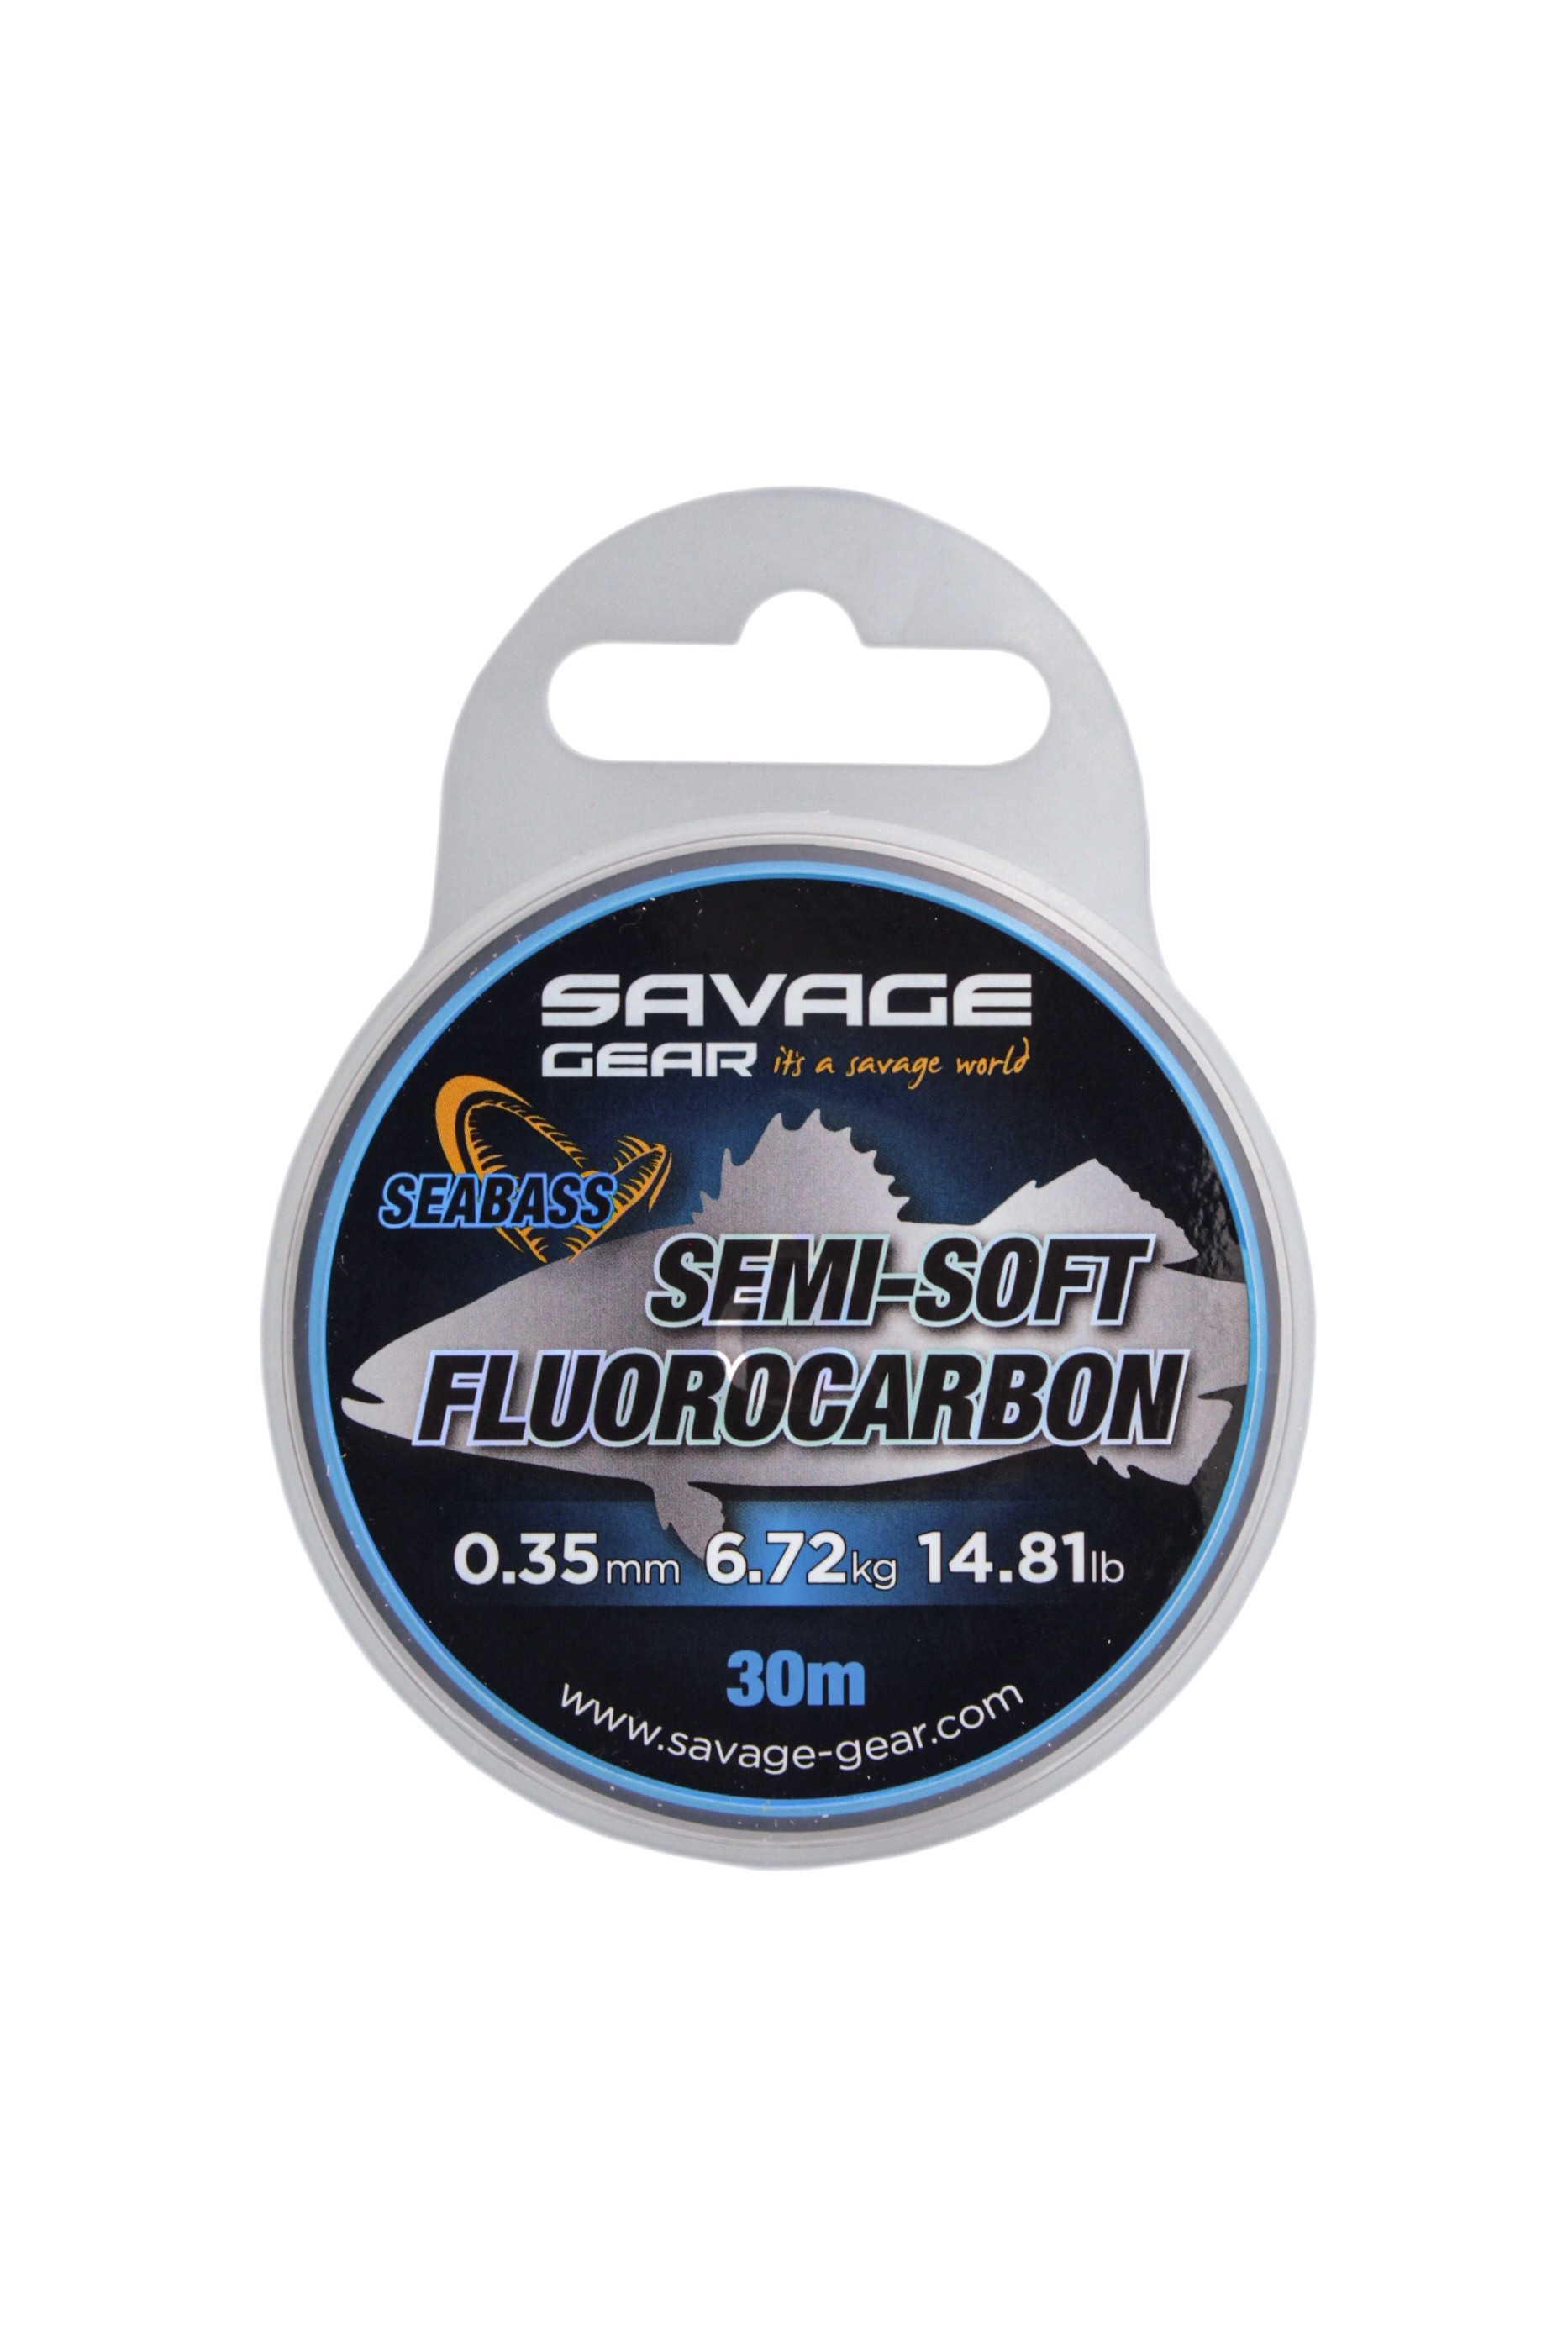 Леска Savage Gear Semi-soft fluorocarbon seabass 30м 0,35мм 6,72кг 14,81lbs clea - фото 1